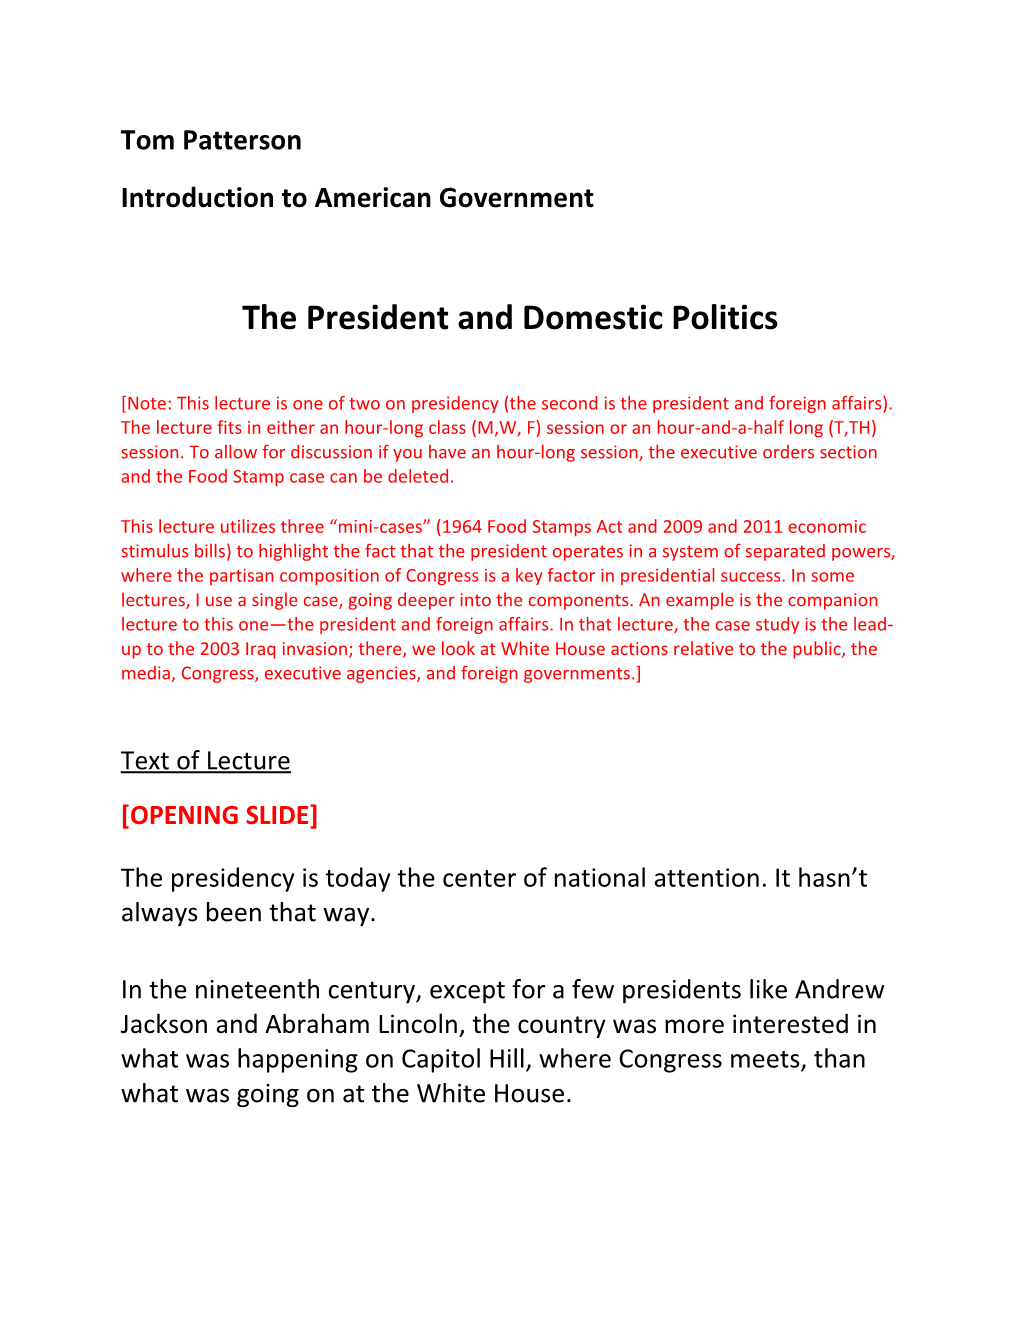 The President and Domestic Politics